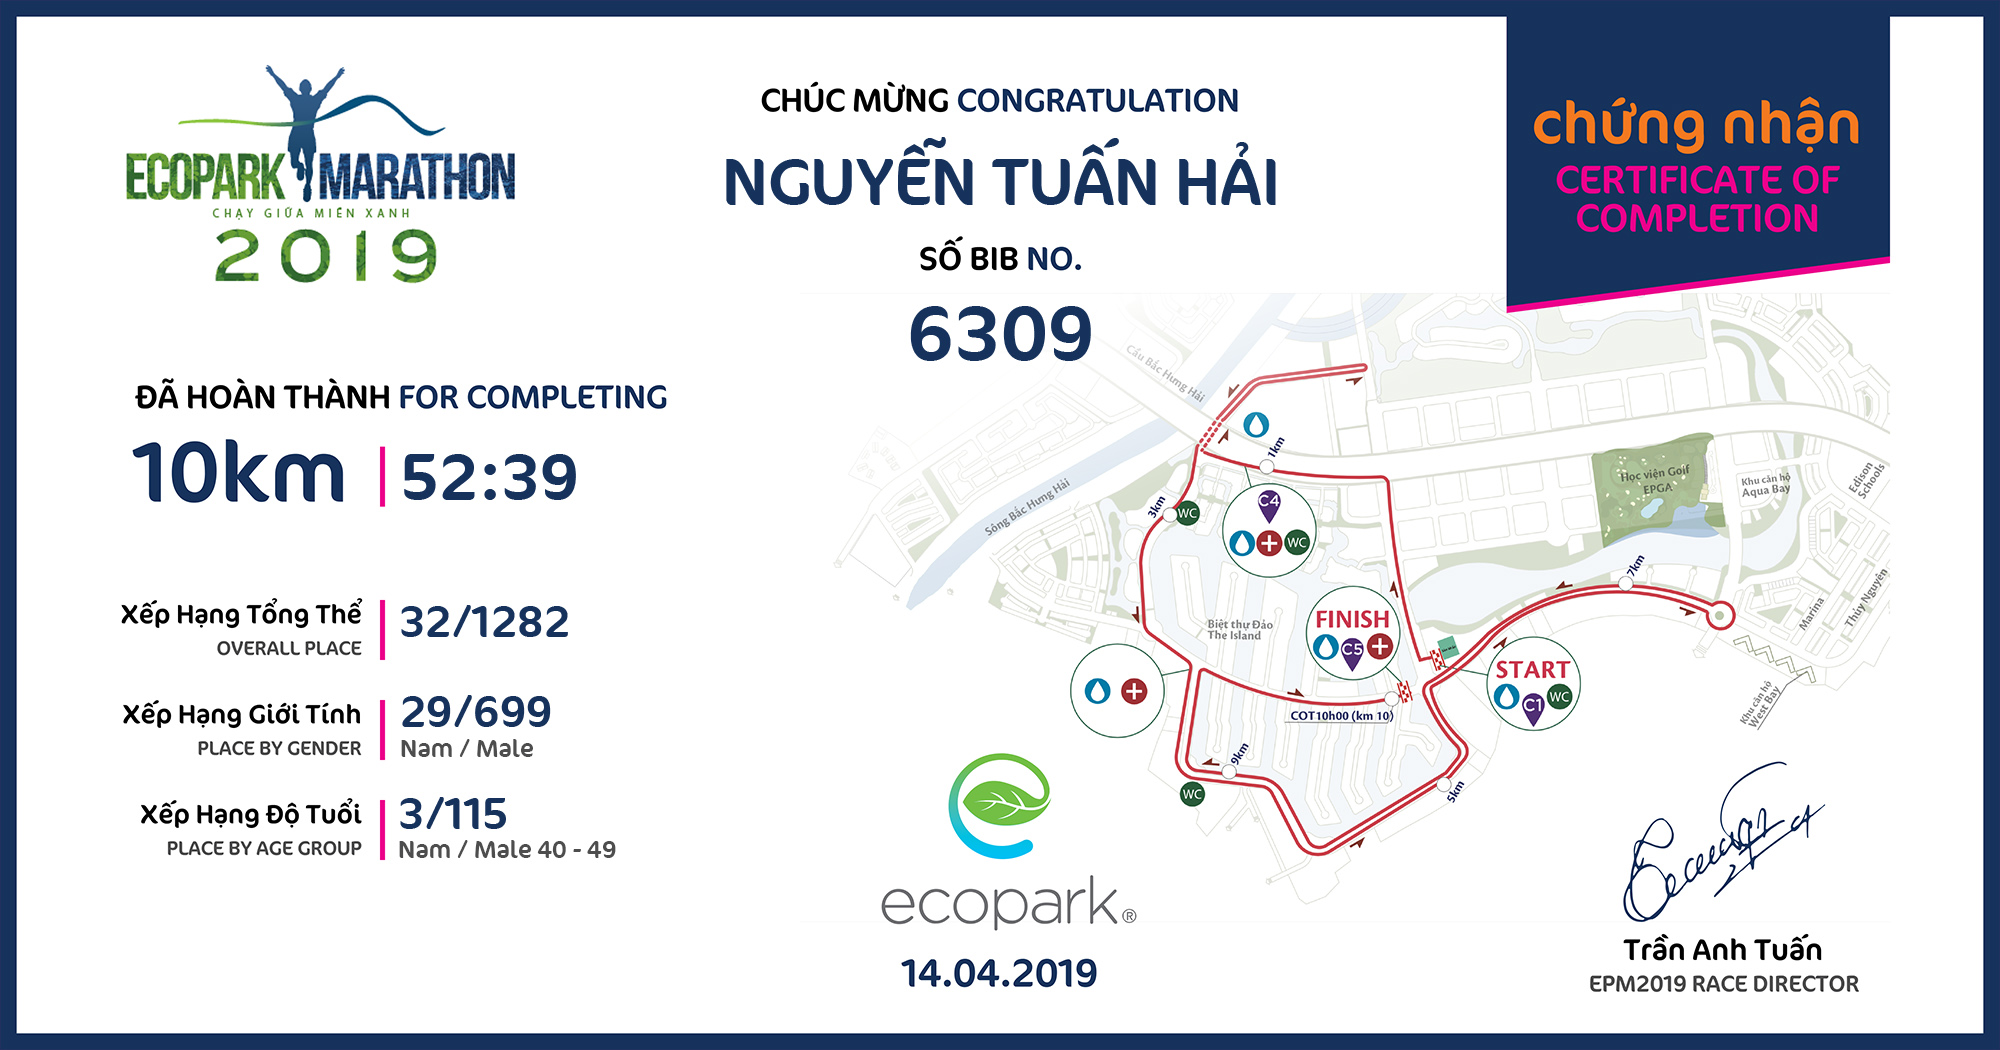 6309 - Nguyễn Tuấn Hải